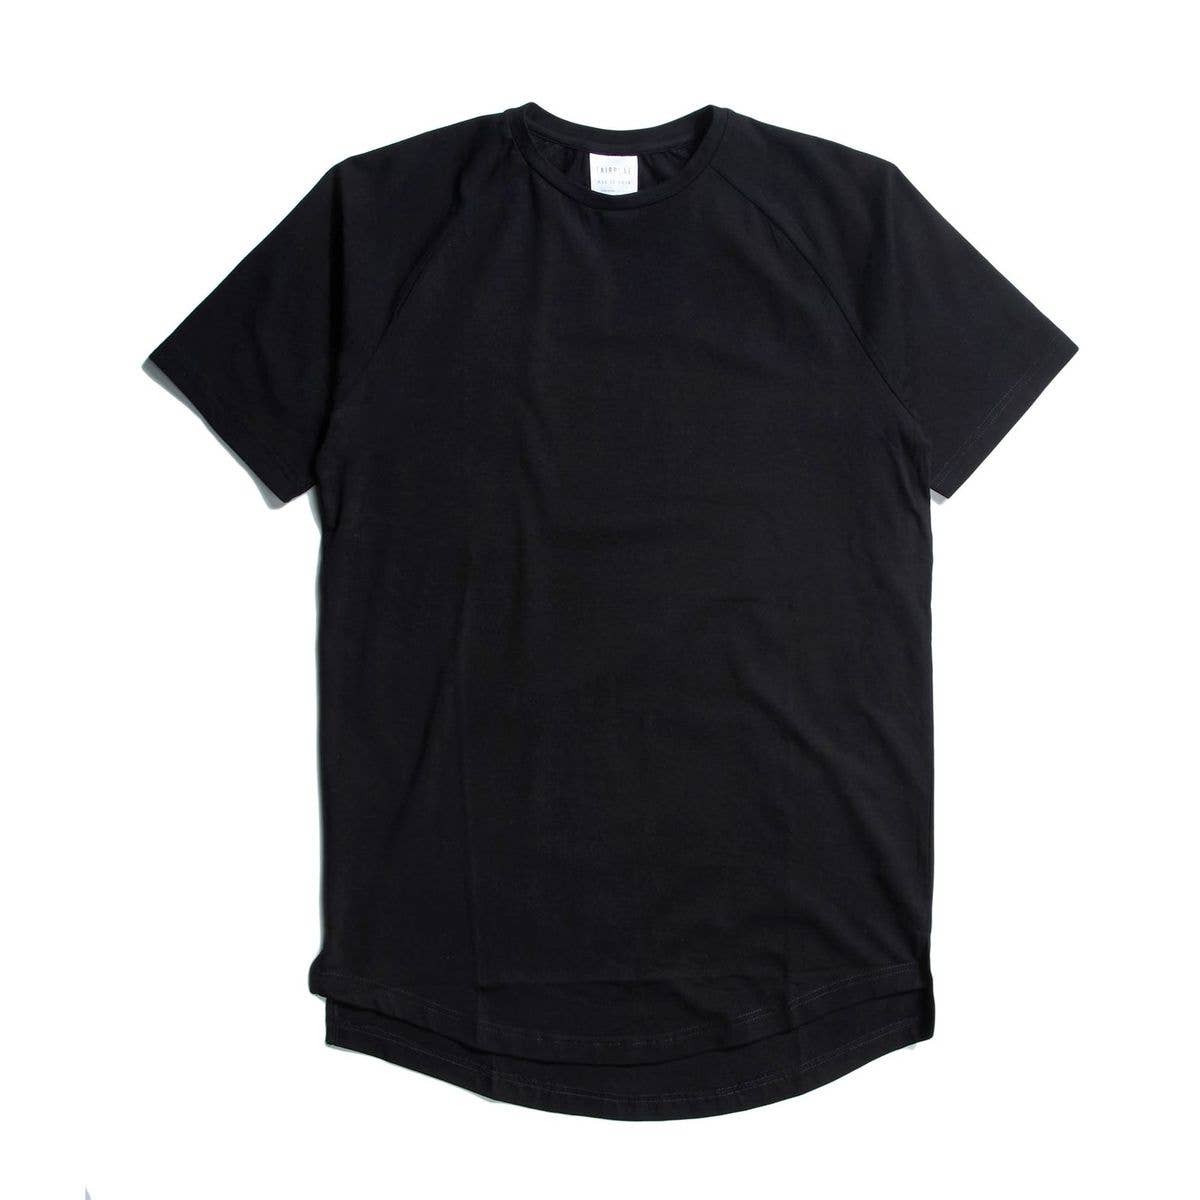 Fairplay, Venice T-shirt, Black